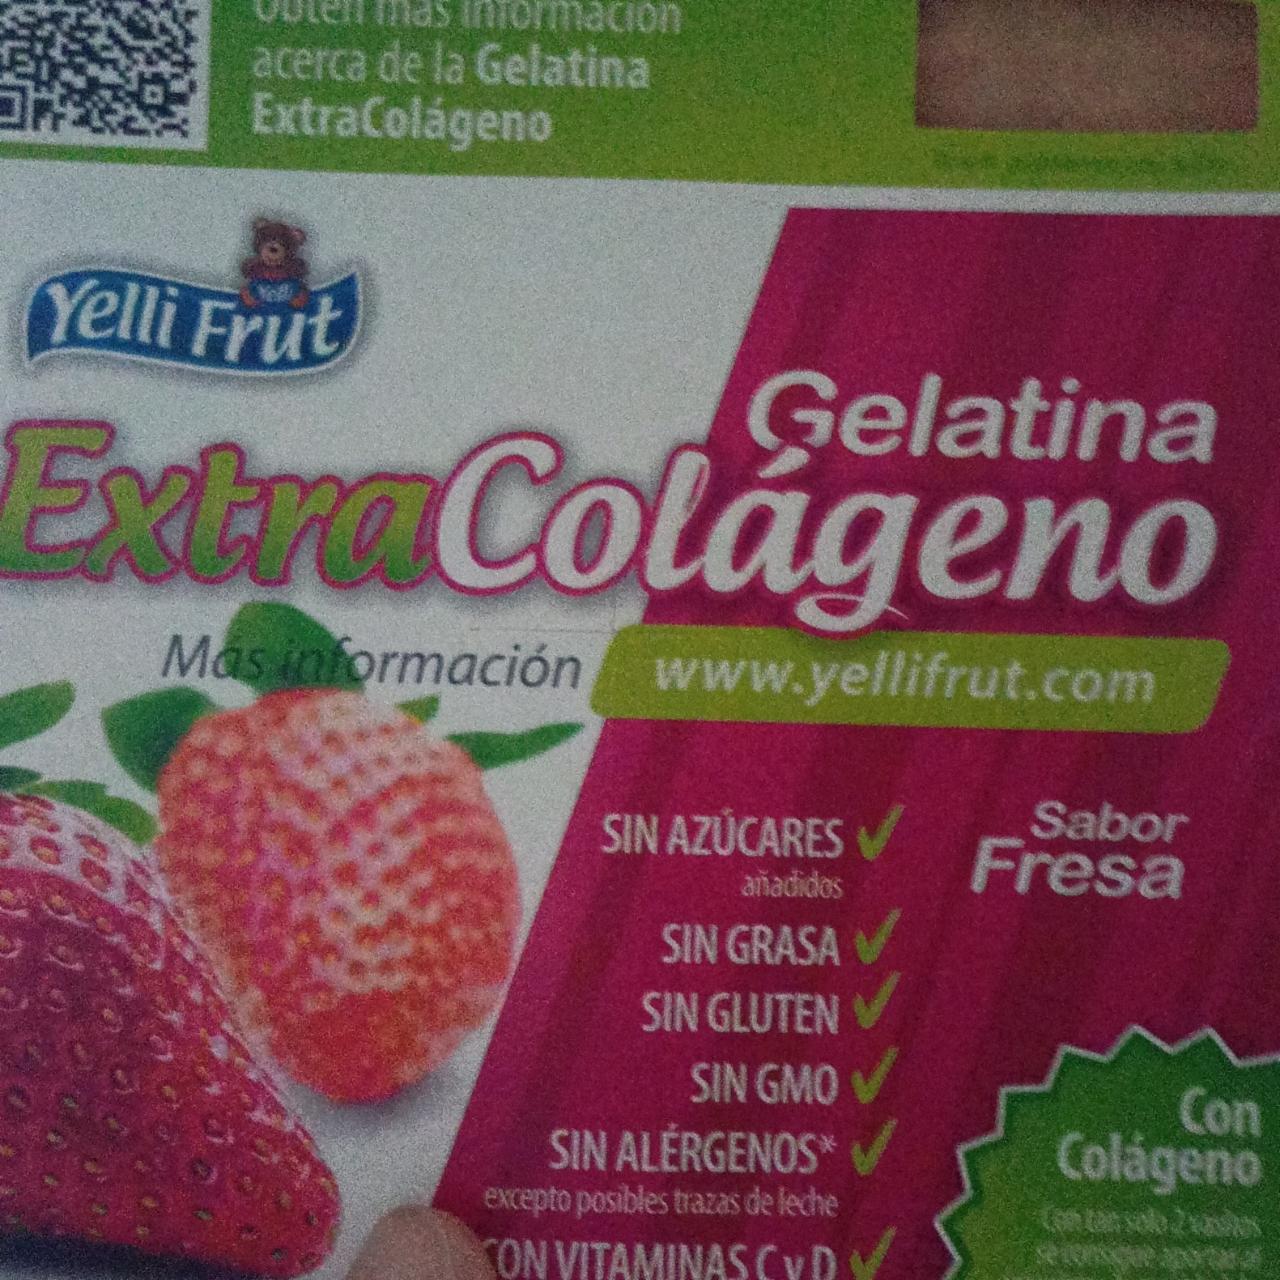 Fotografie - Gelatina extra colágeno sabor fresa Yelli Frut